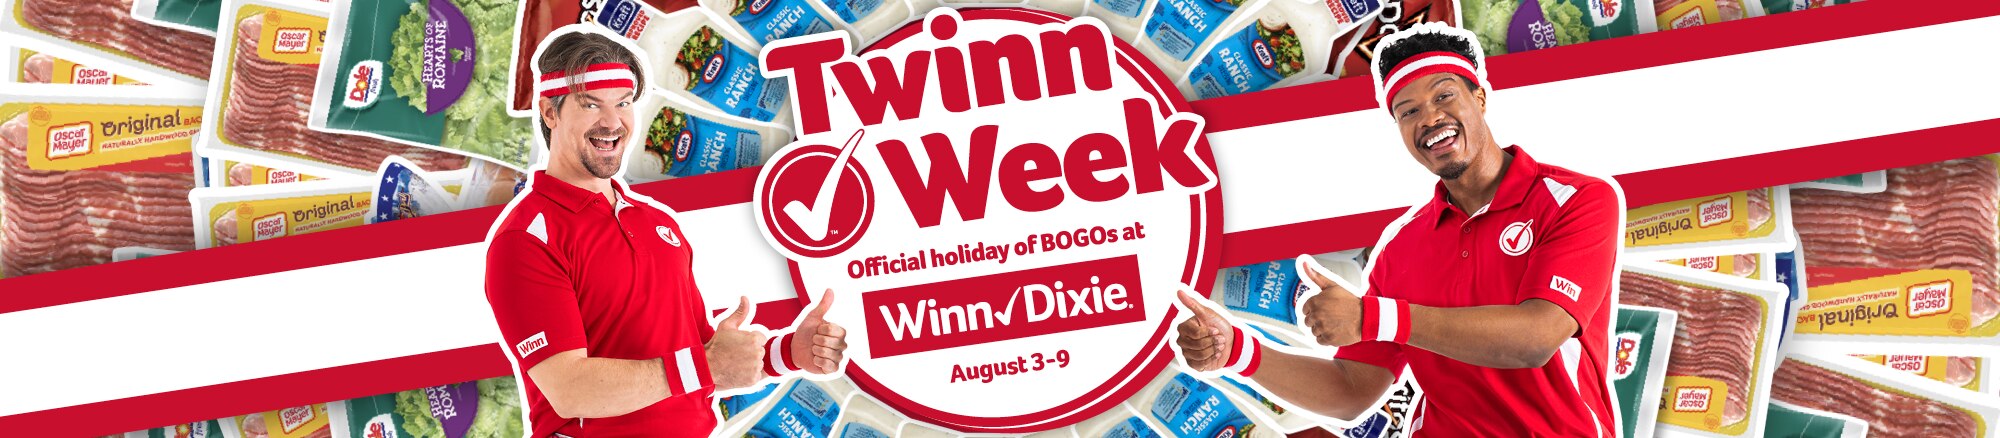 Twinn Week. Official holiday of BOGOs at Winn-Dixie. August 3-9.